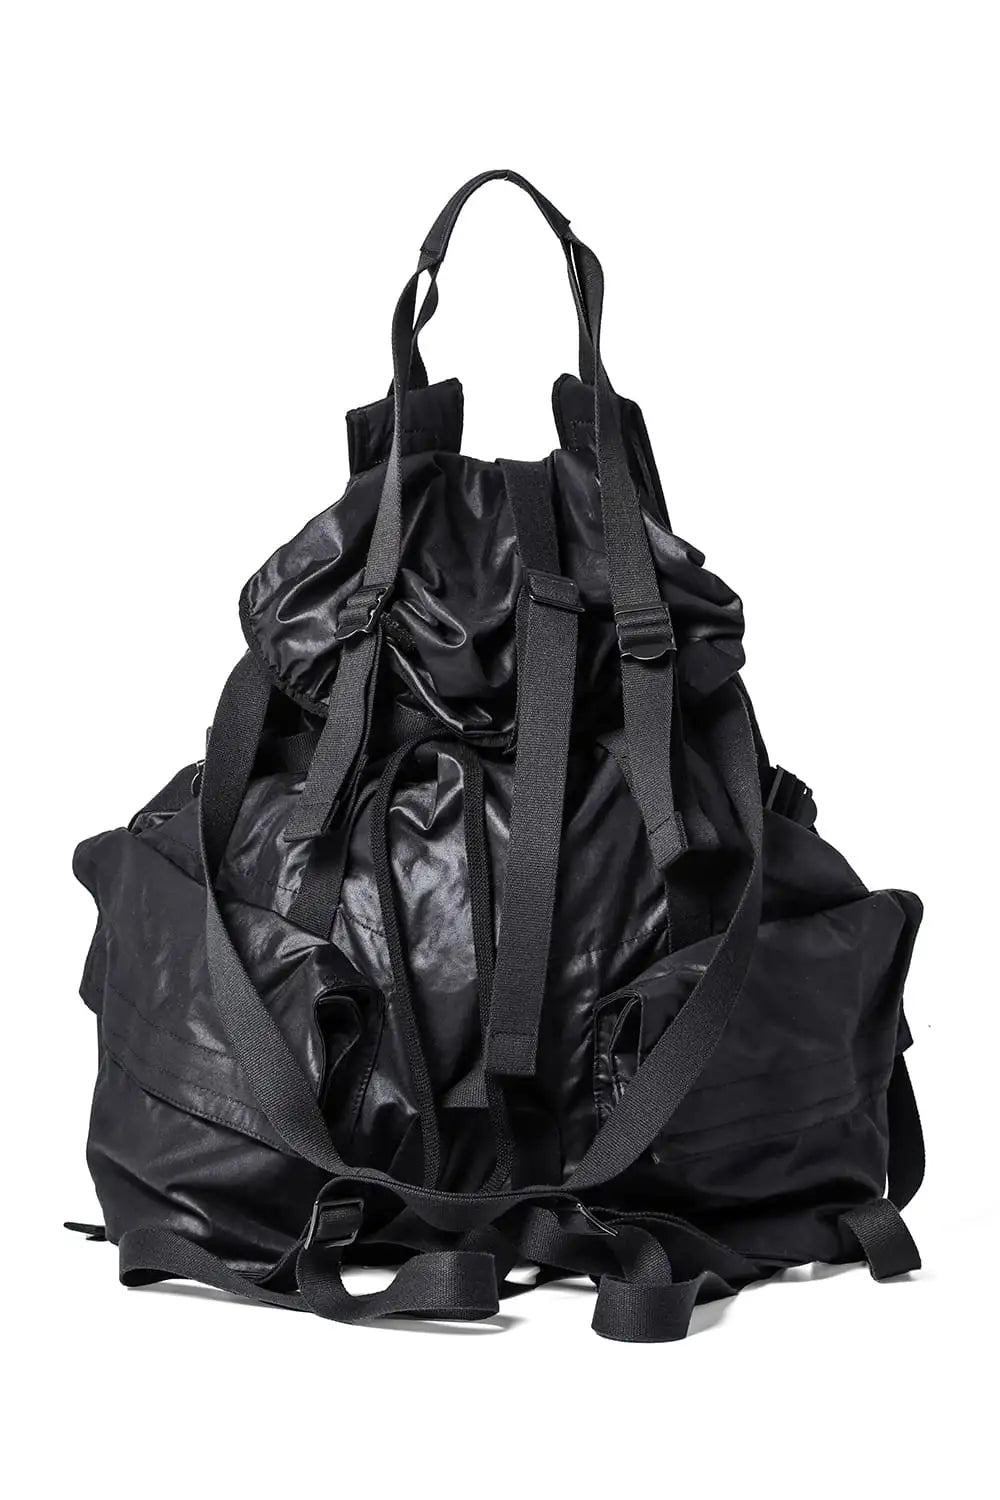 857BGU1-Black | Polyester/Cotton Multi Pocket Backpack | JULIUS ...